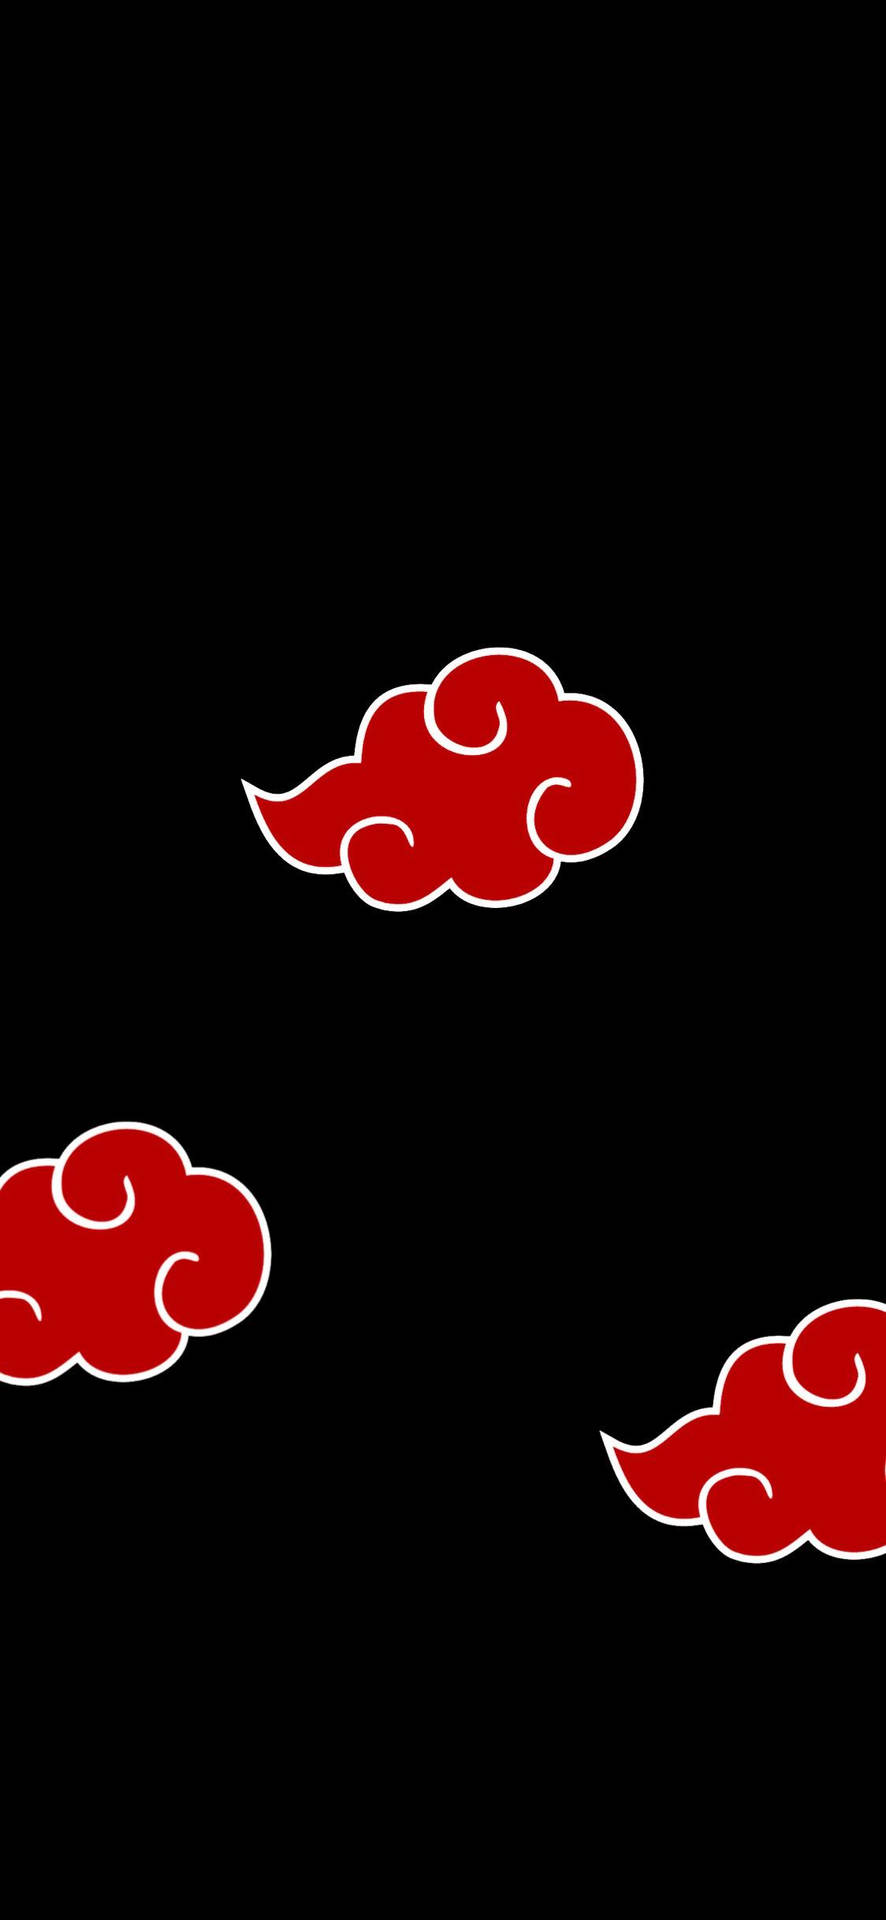 Red Akatsuki Cloud iPhone Wallpaper